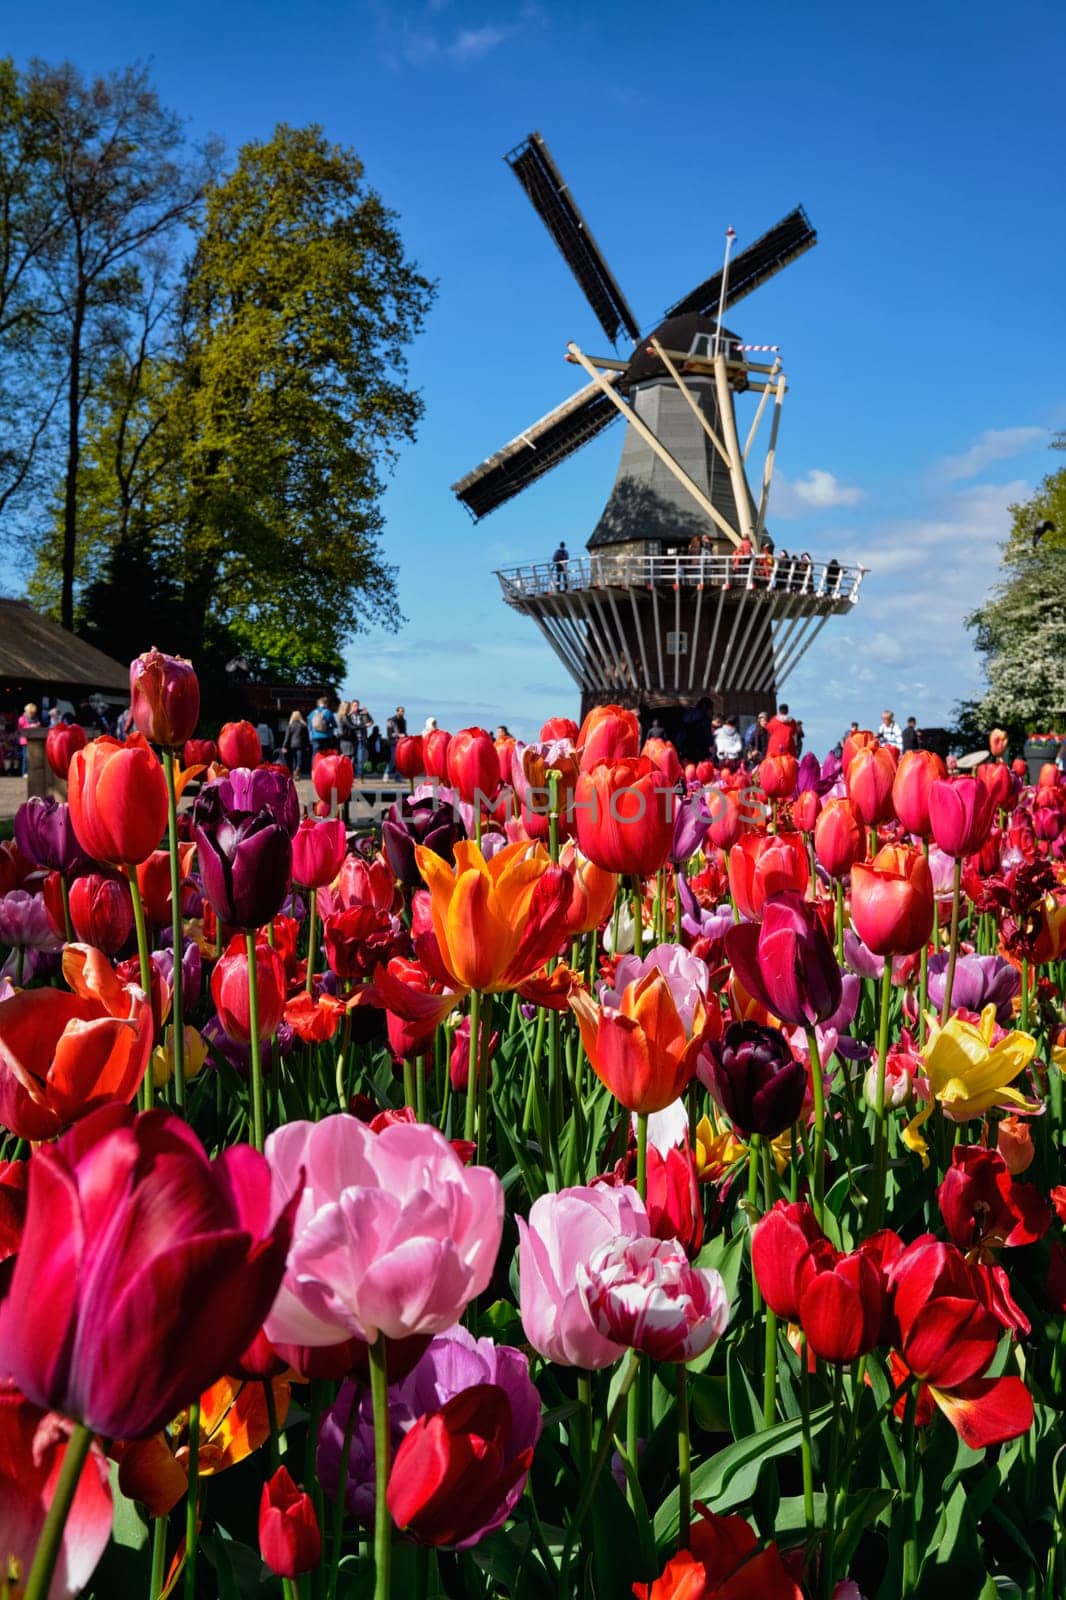 Blooming tulips flowerbed and windmill in Keukenhof flower garden by dimol